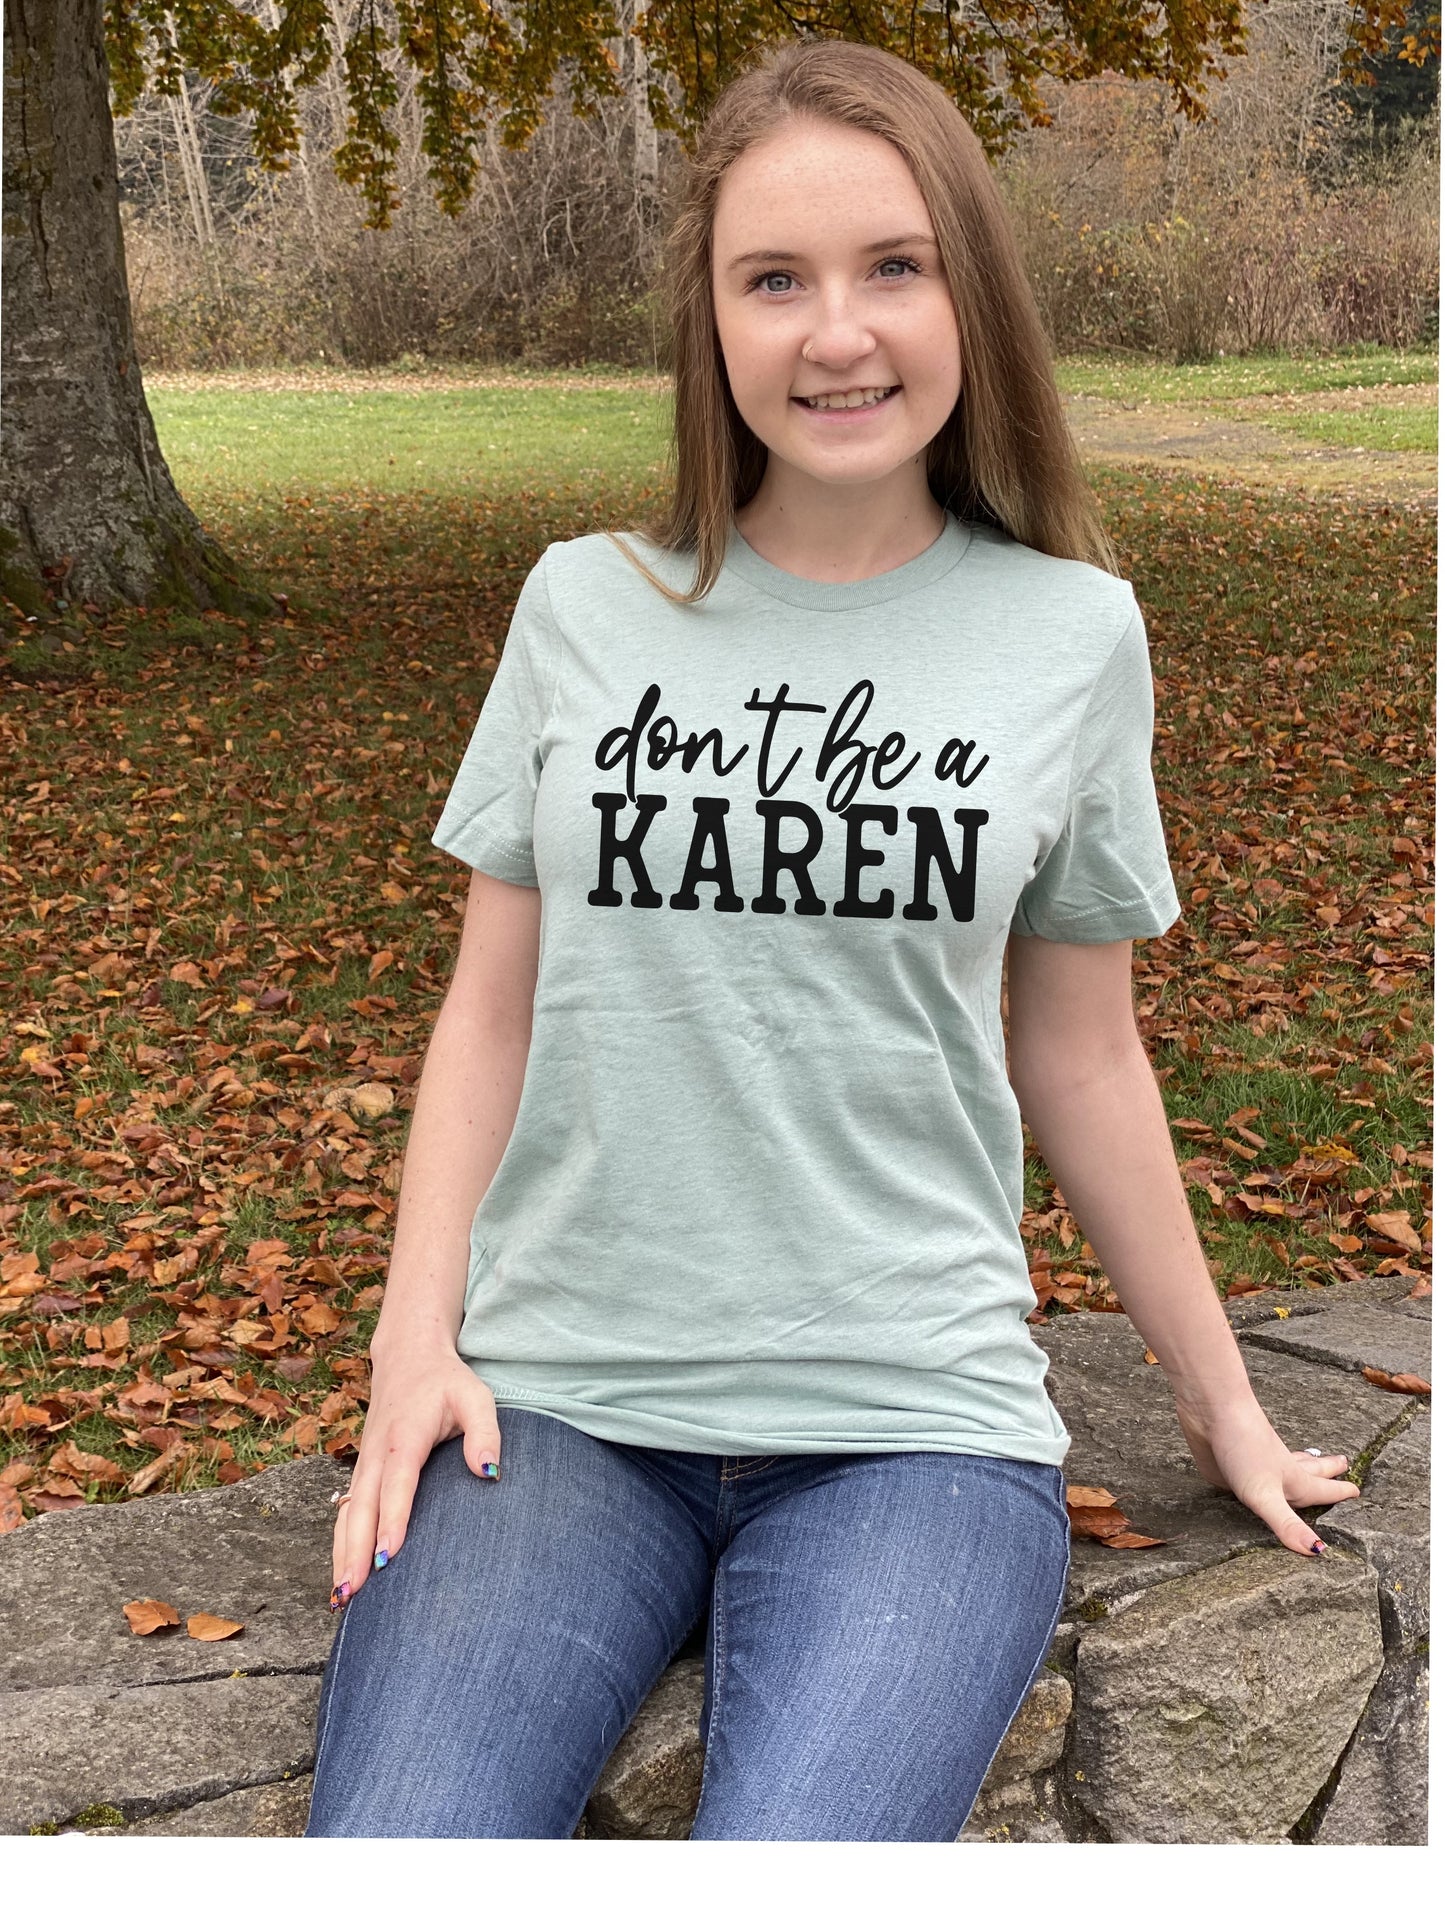 Fun, custom "Don't be a Karen" T-shirt